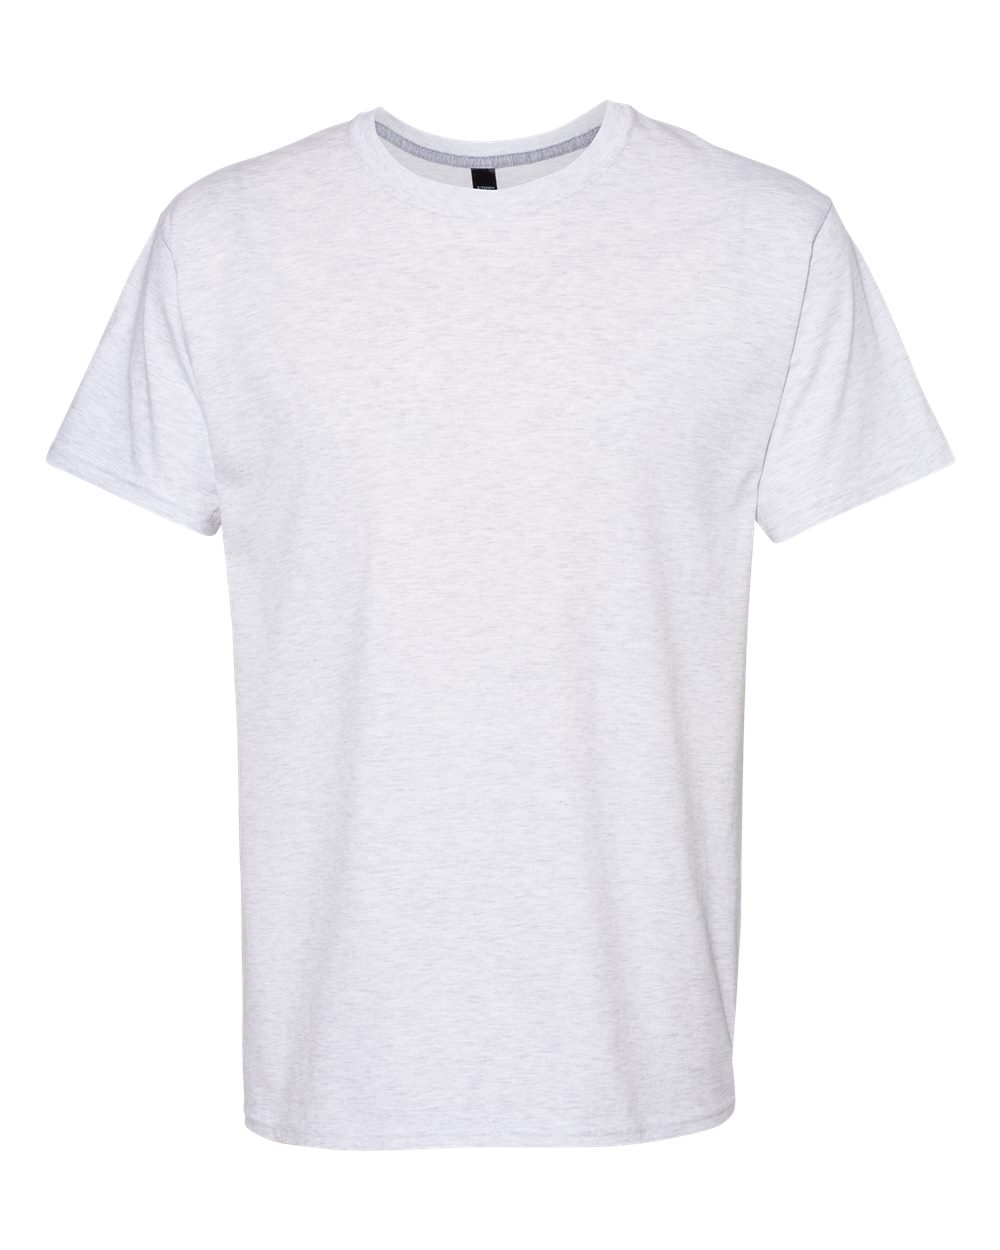 Hanes P4200 | X-Temp ® T-Shirt | ShirtSpace